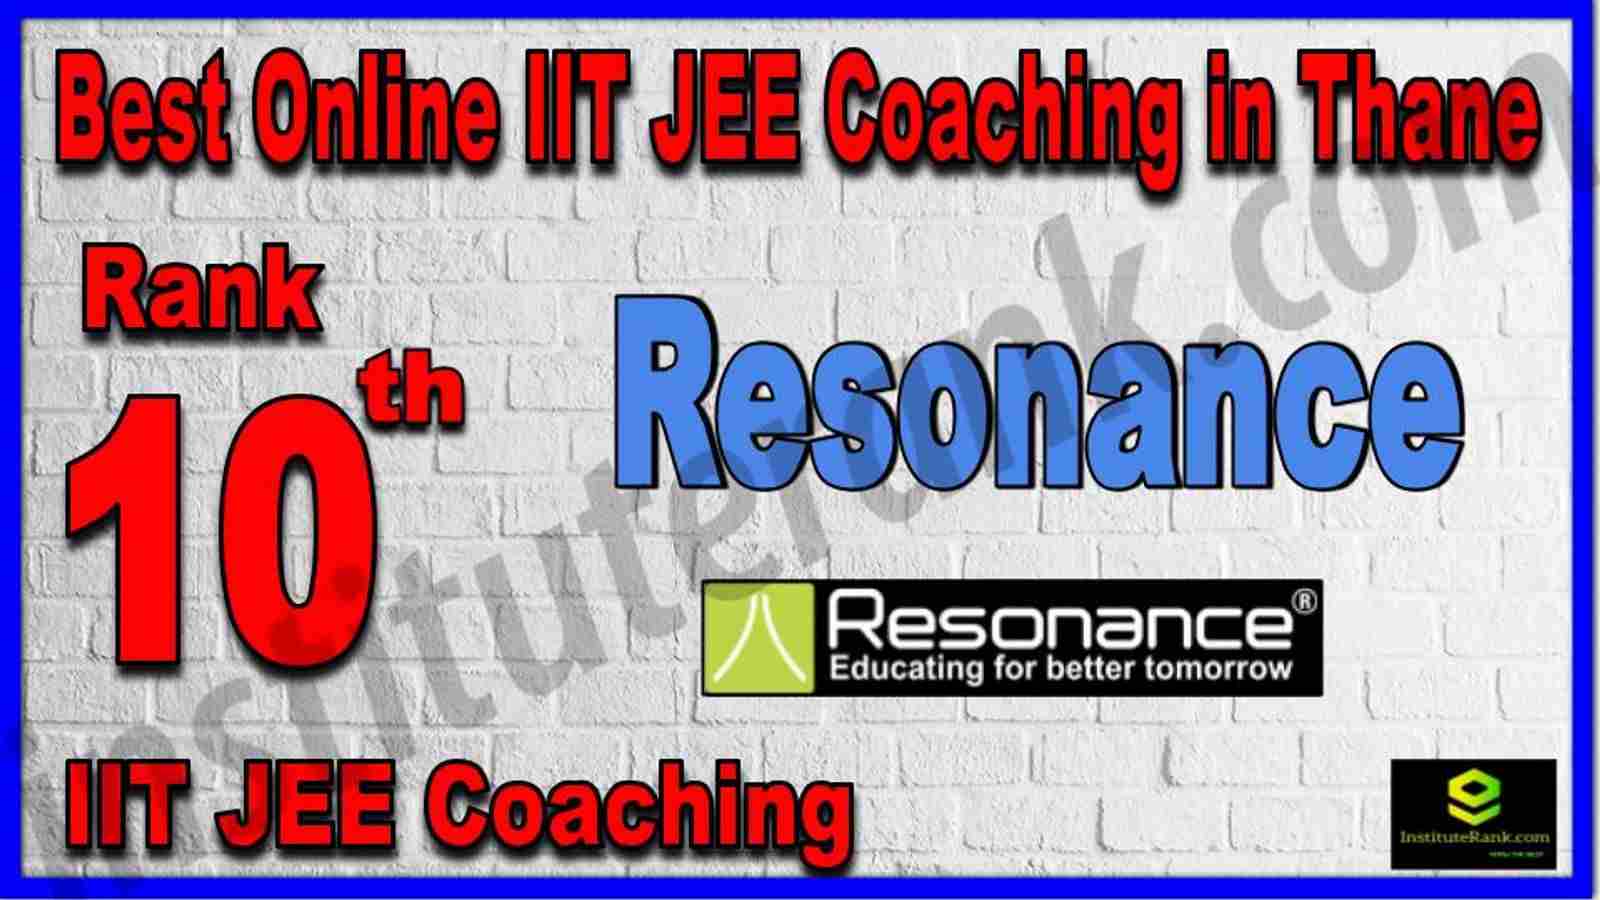 Rank 10th Best Online IIT JEE Coaching in Thane